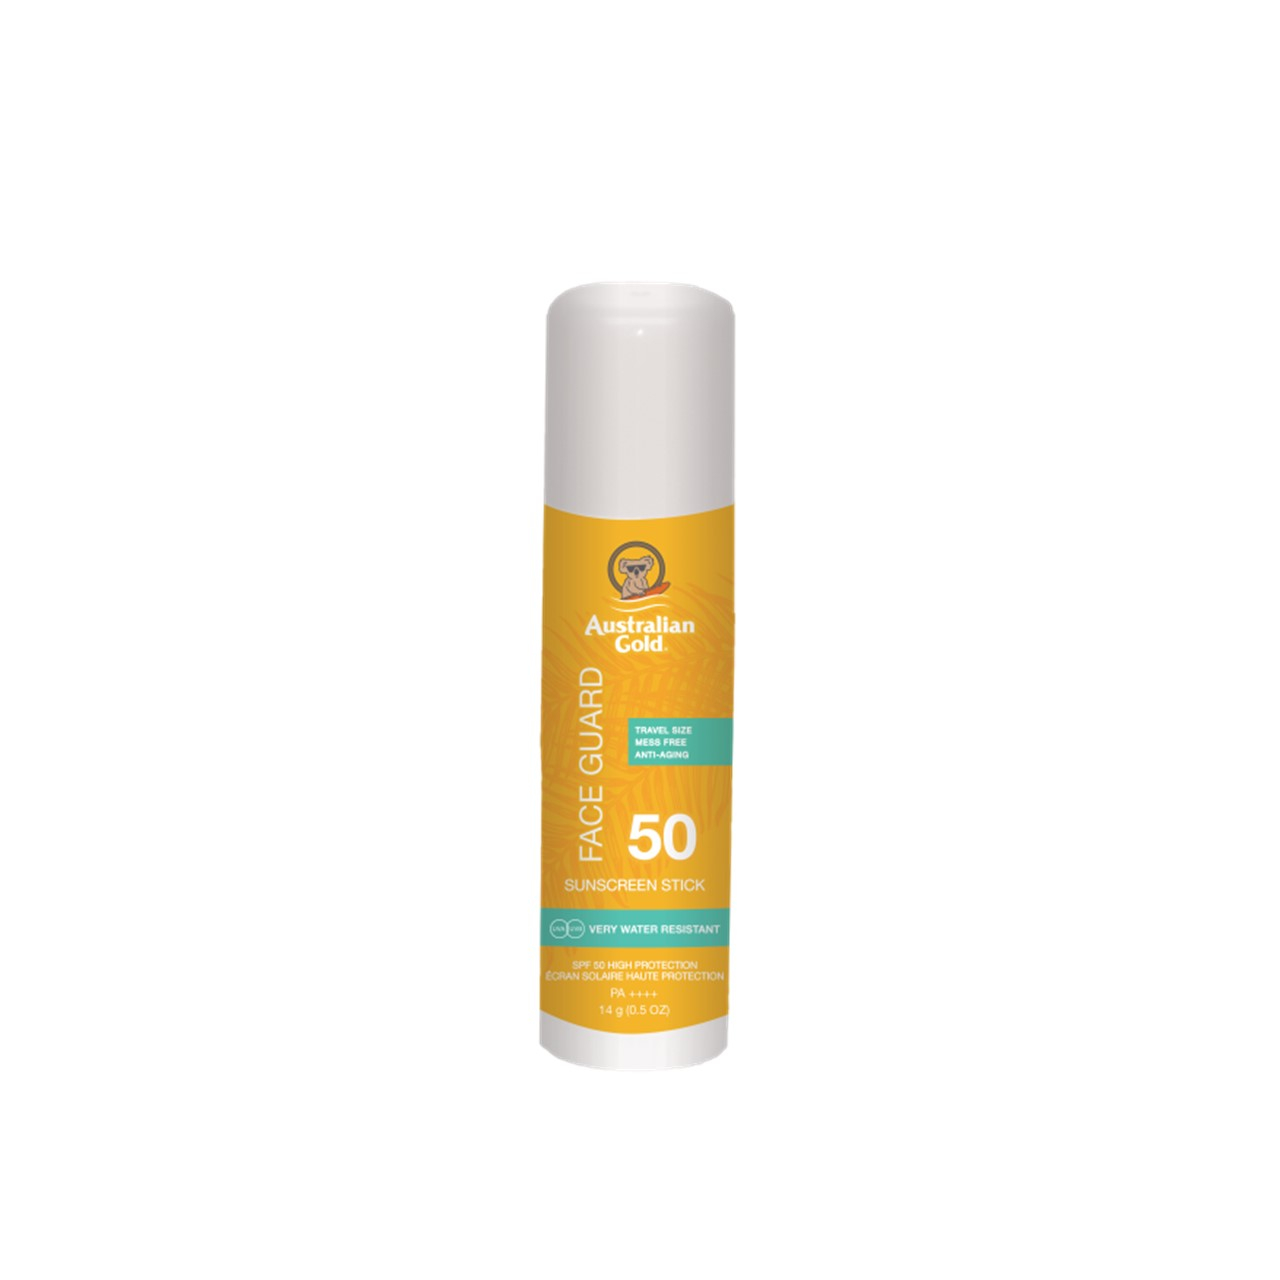 https://static.beautytocare.com/media/catalog/product/a/u/australian-gold-face-guard-sunscreen-stick-spf50-14g.jpg